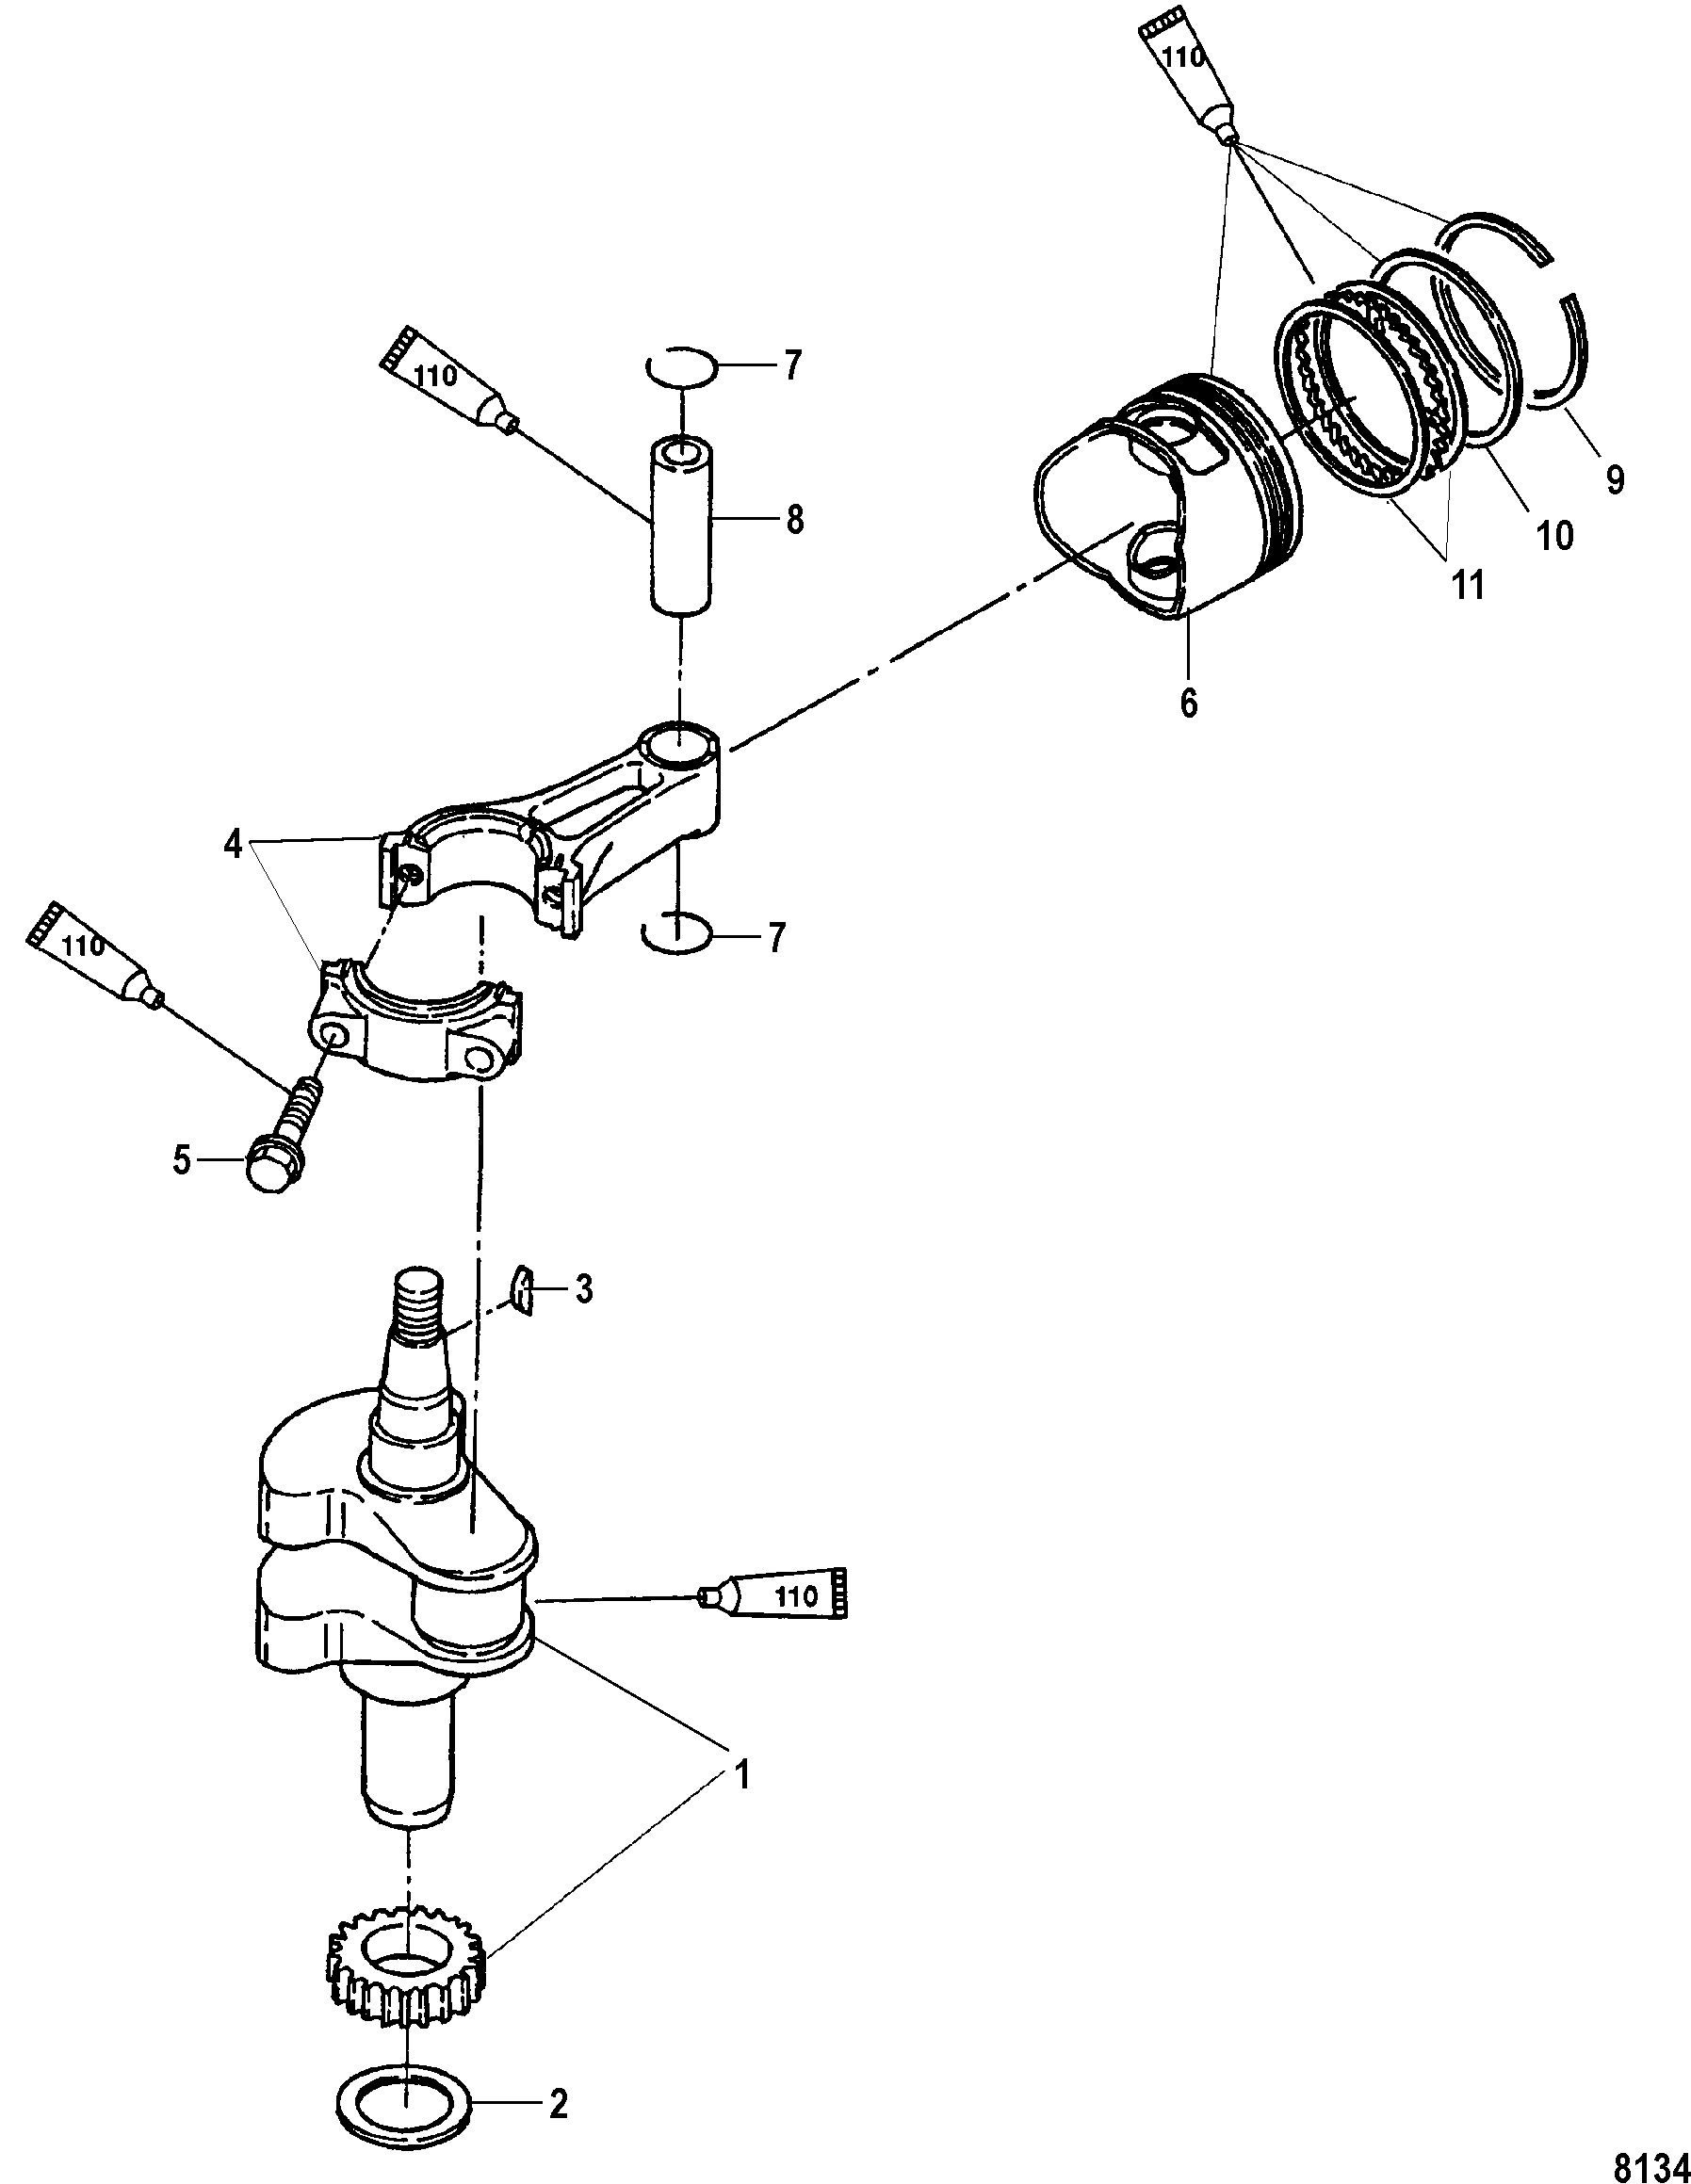 Crankshaft, Piston and Connecting Rods